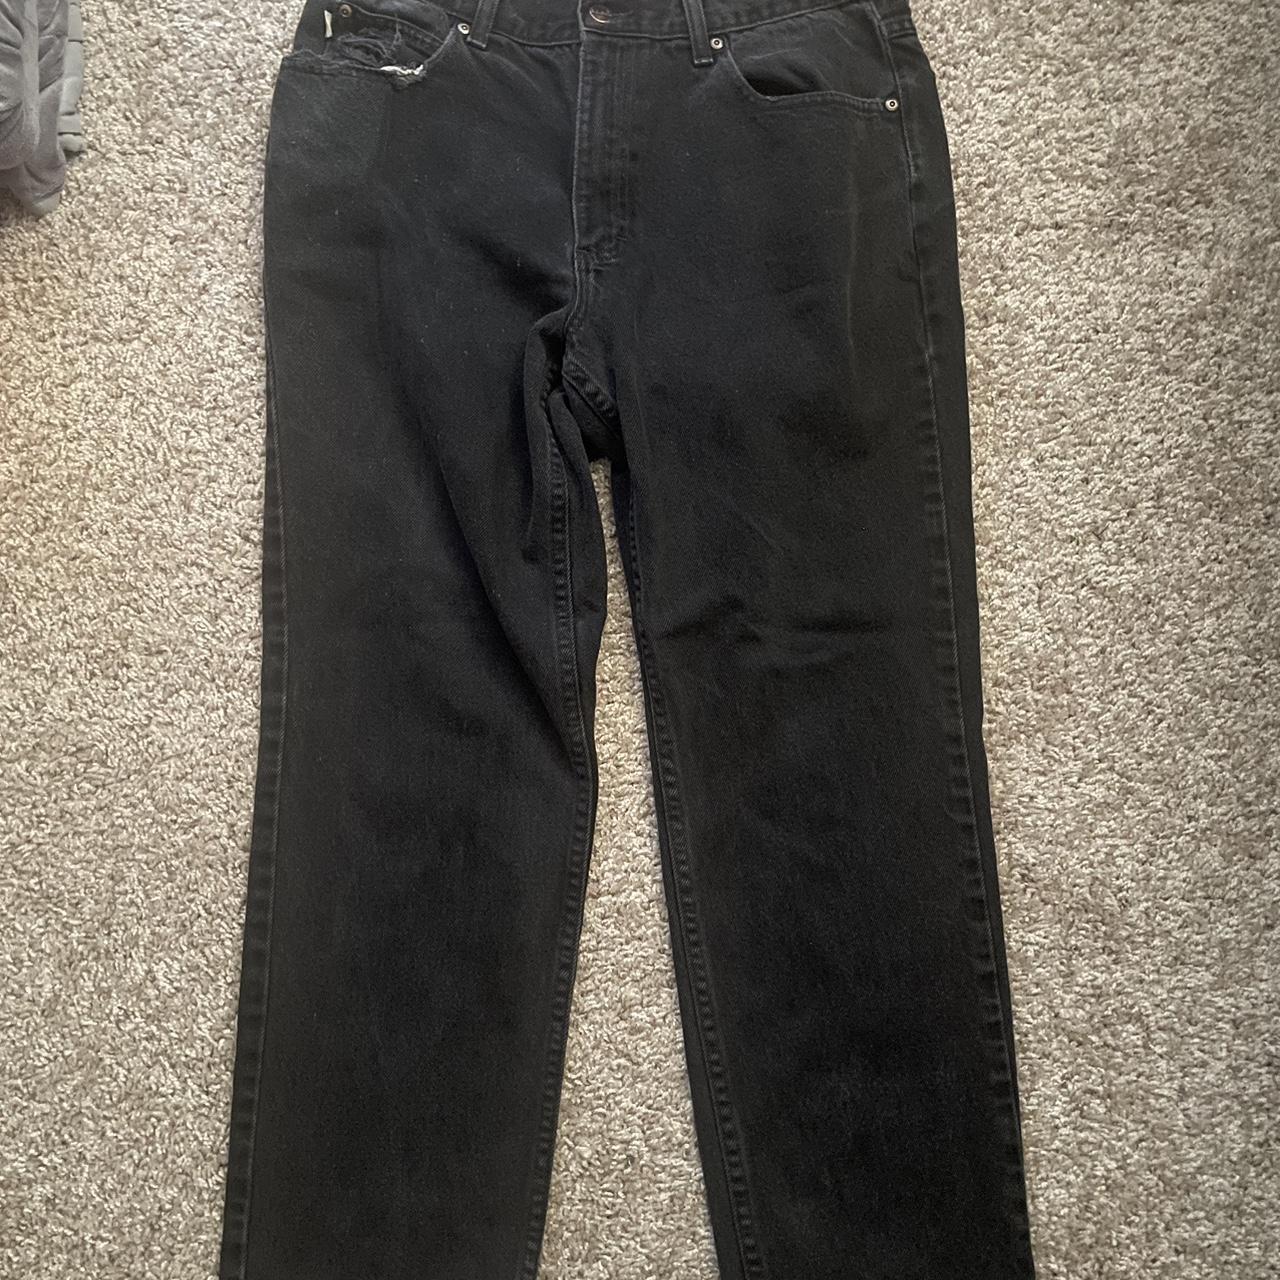 baggy LLBean black jeans size 33W30L some rips on... - Depop